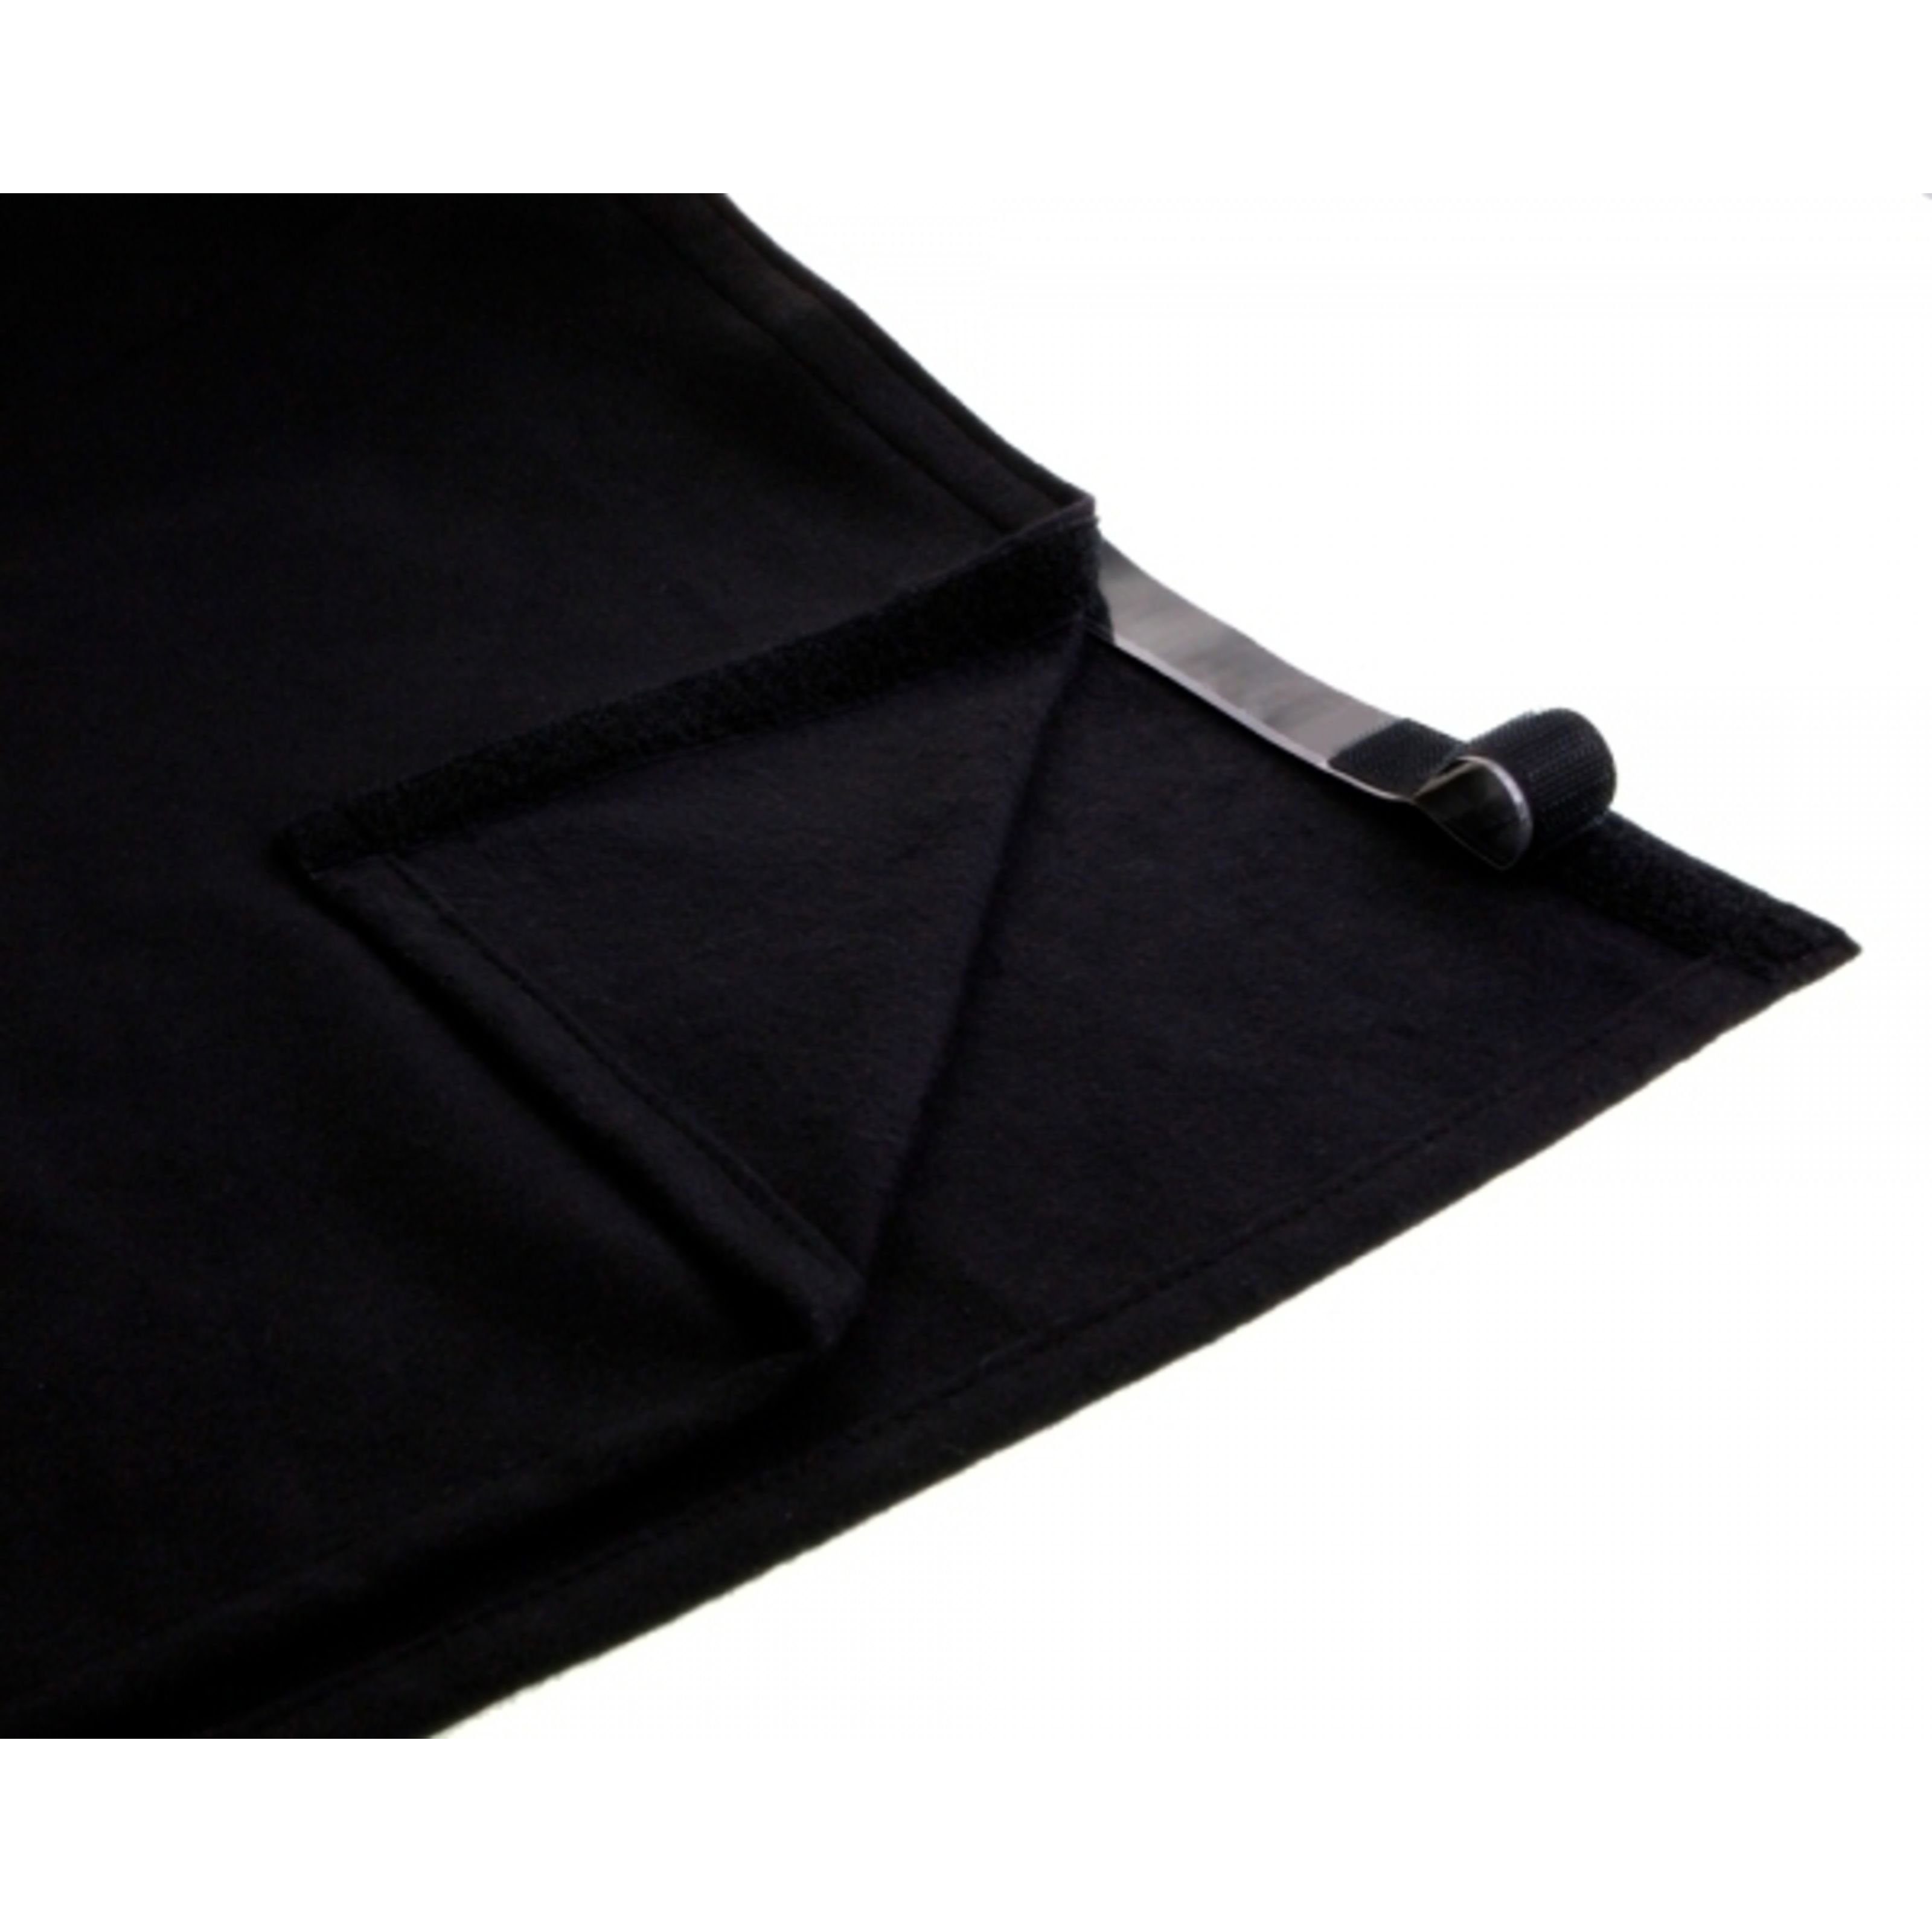 lightmaXX Gerüst, Podestverkleidung, schwarz 5m x 0,6m inkl. Klettband